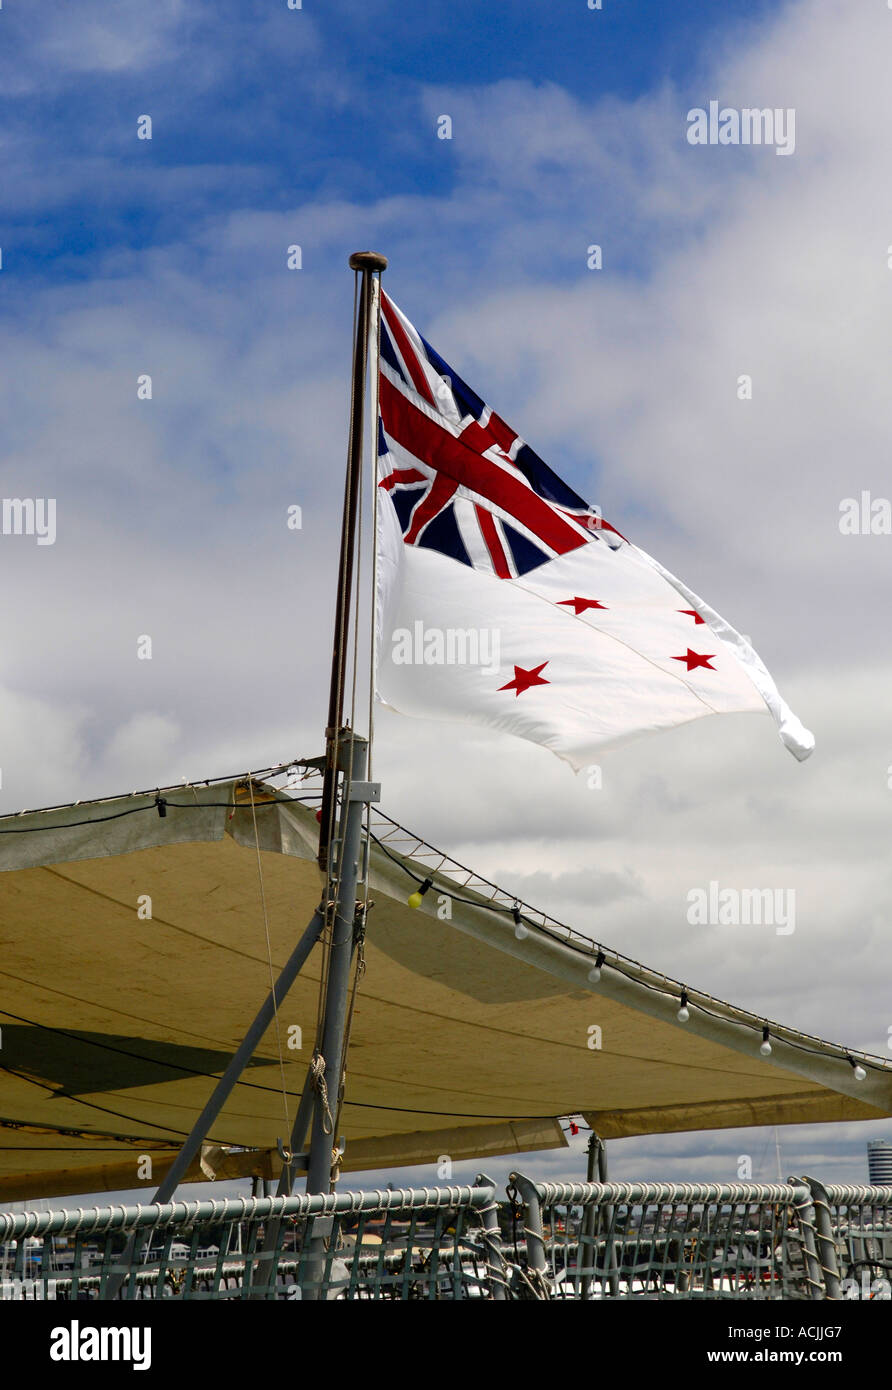 New Zealand White ensign on Royal New Zealand navy frigate Stock Photo